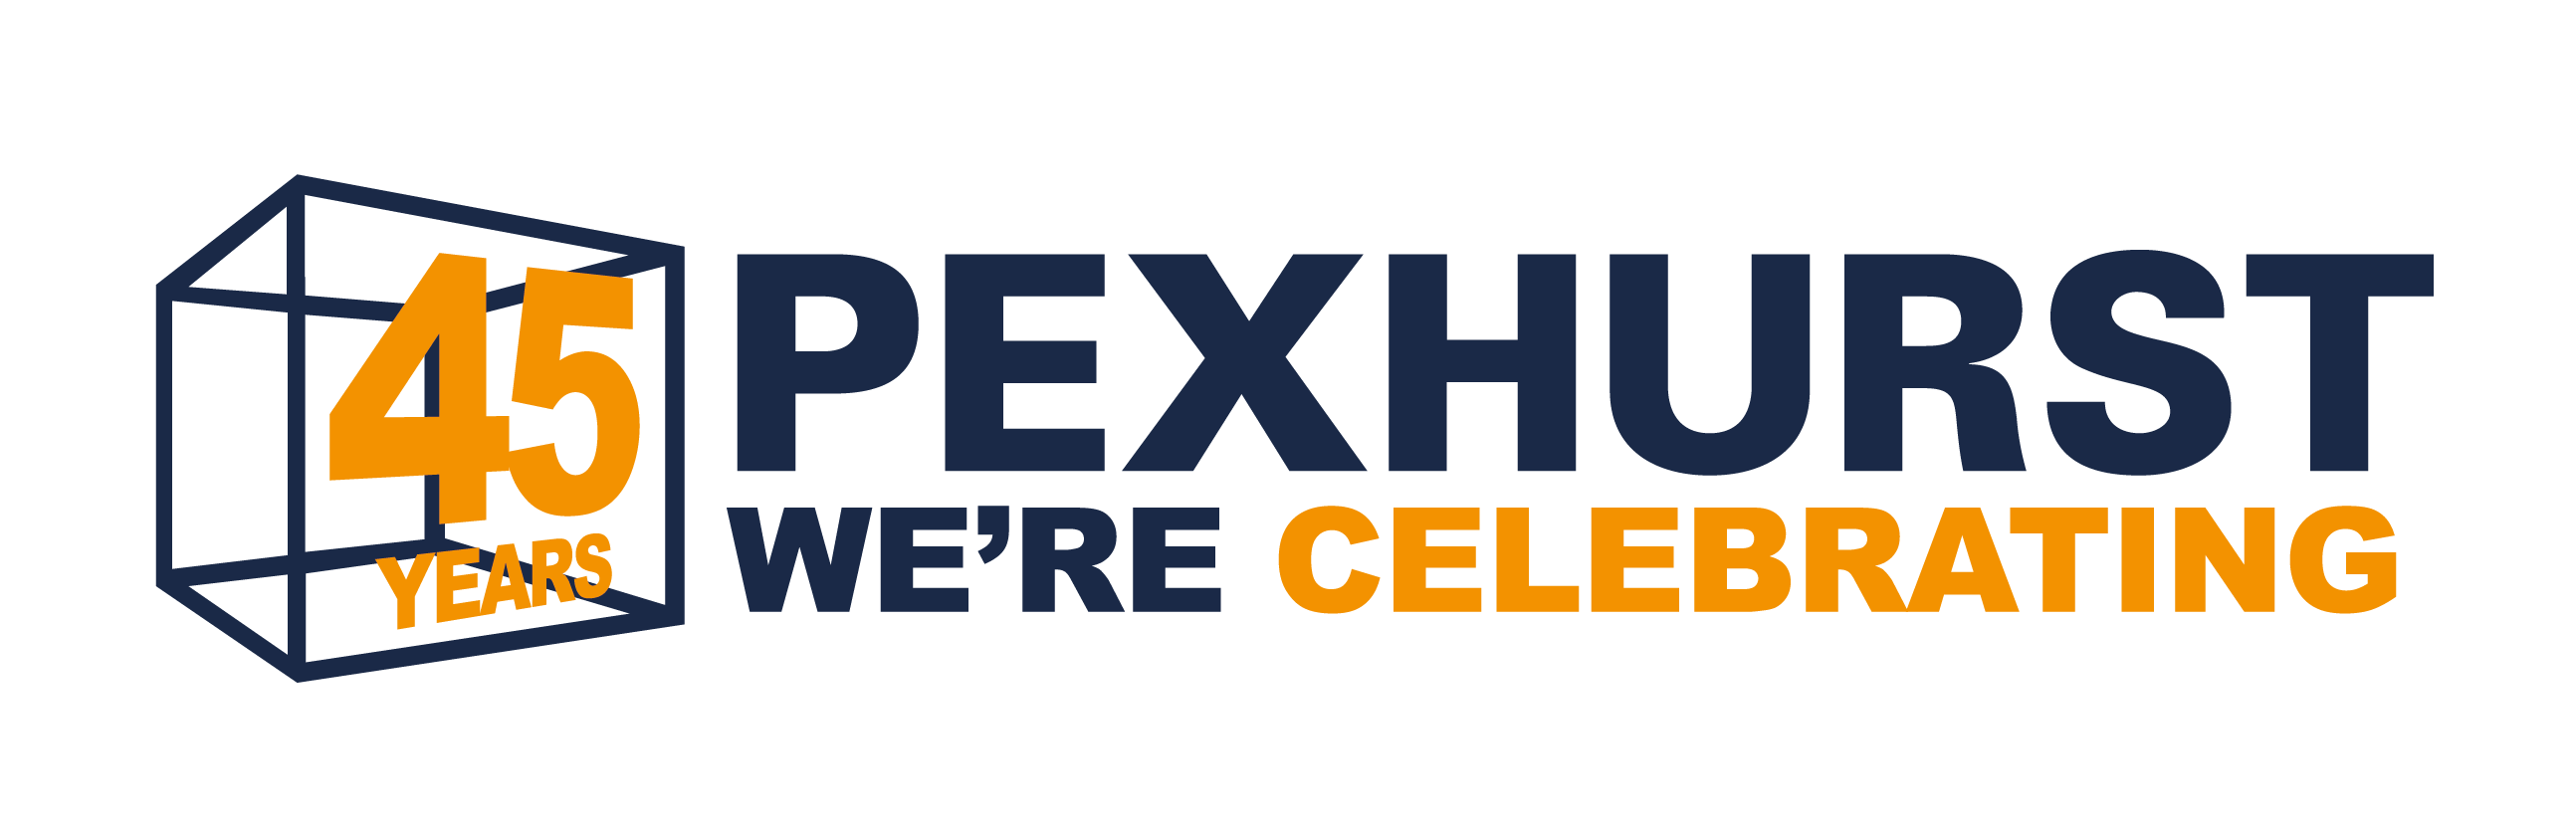 Pexhurst Services Limited